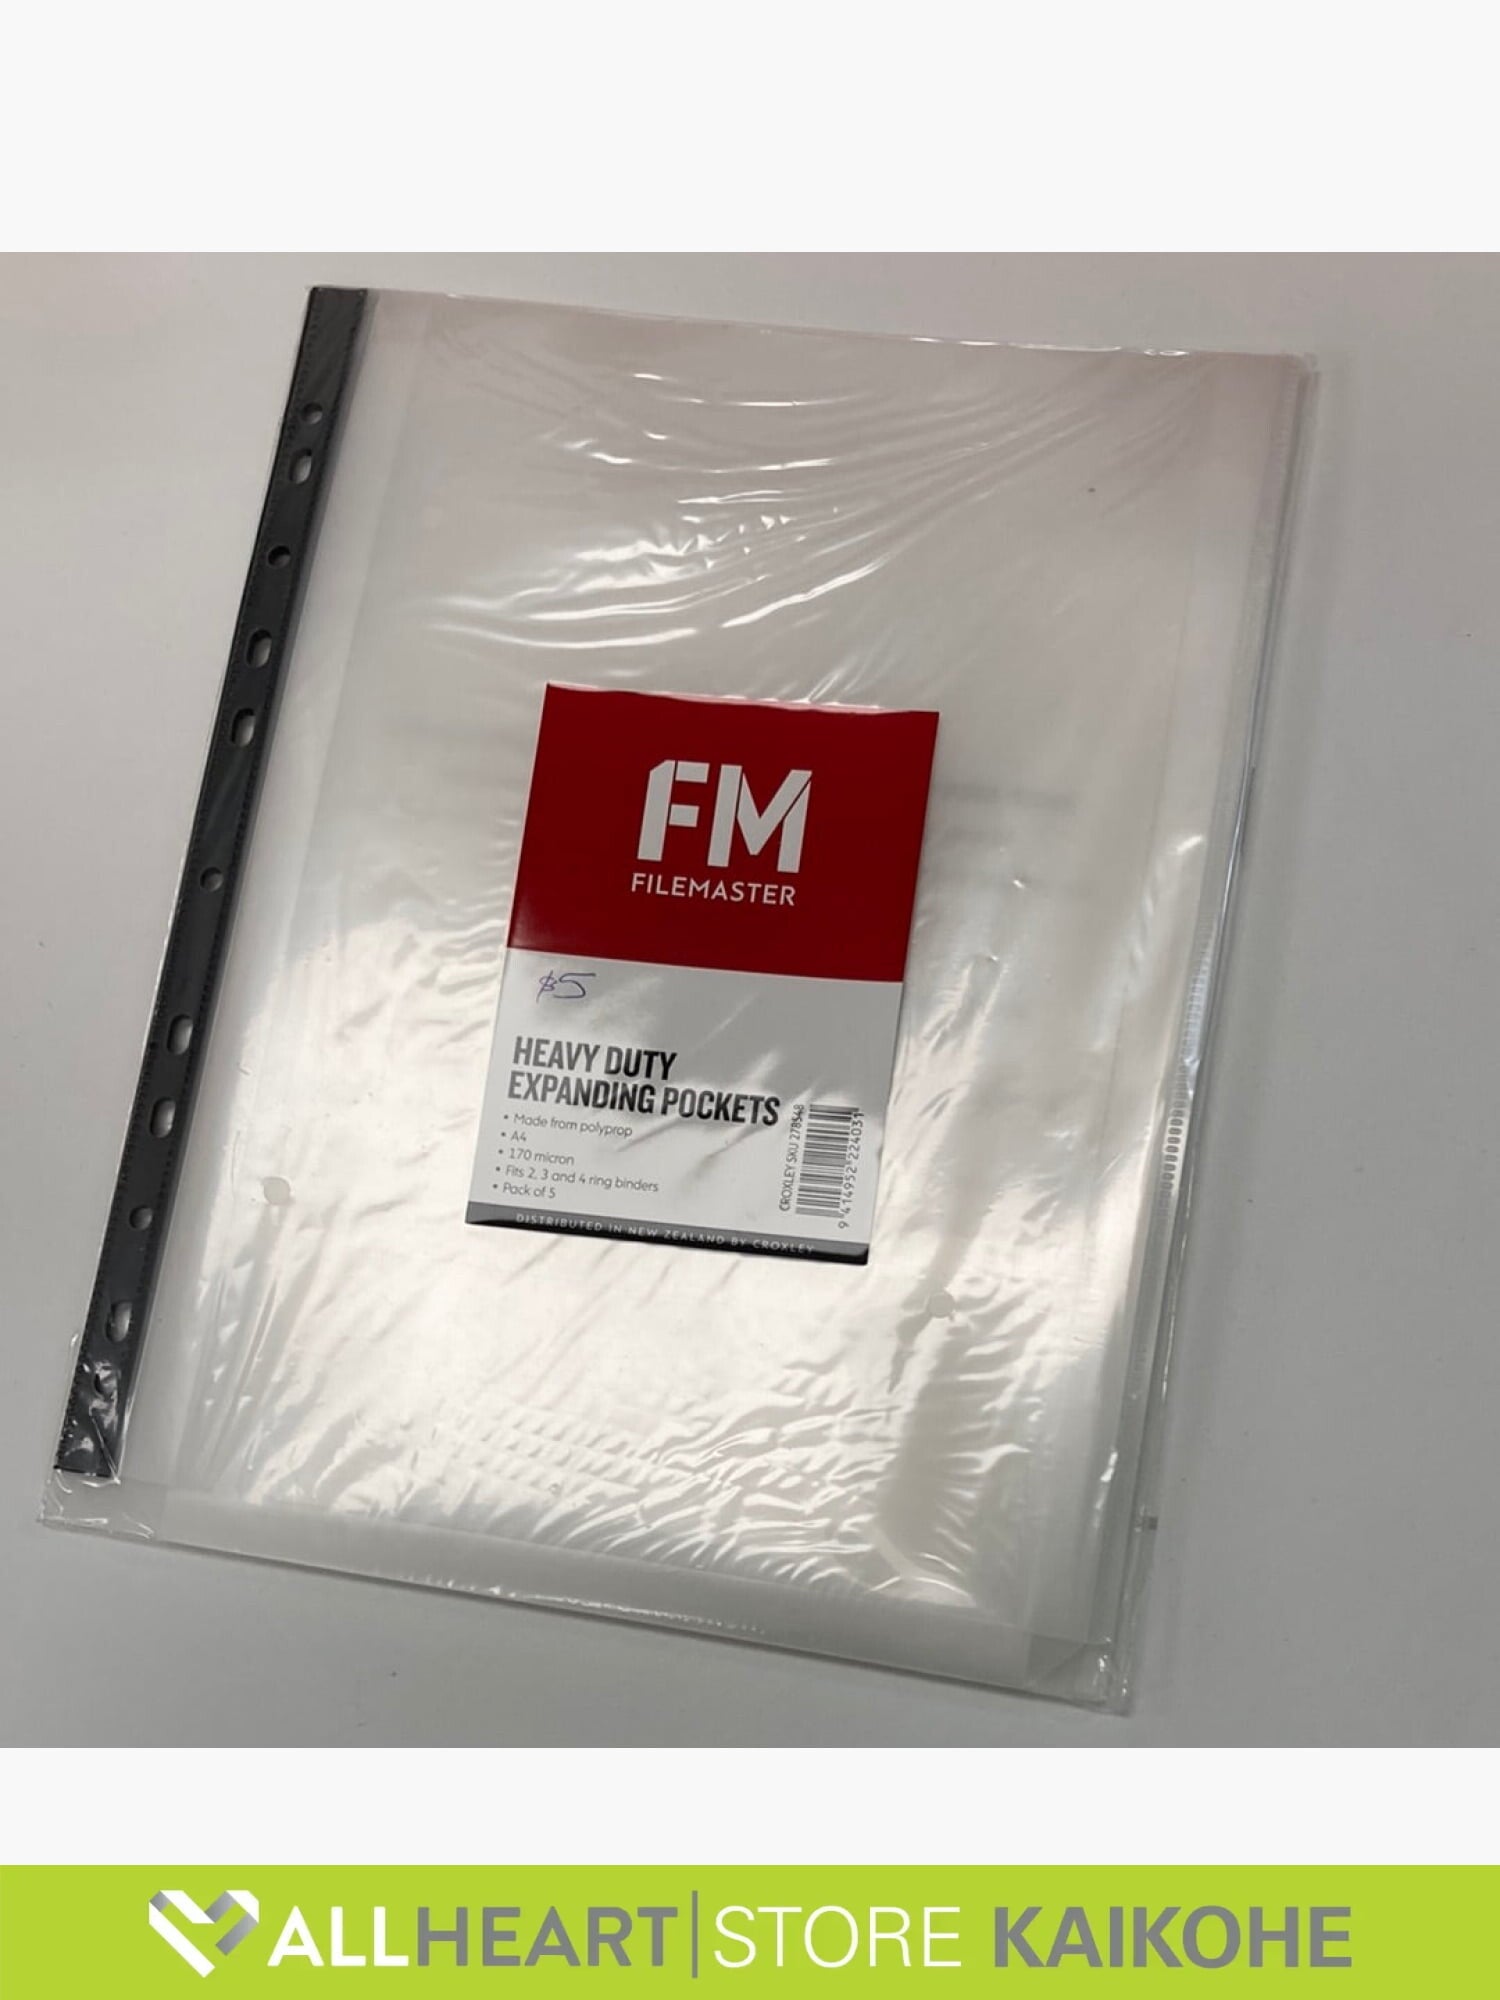 FM Filemaster - Heavy Duty Expanding Pockets